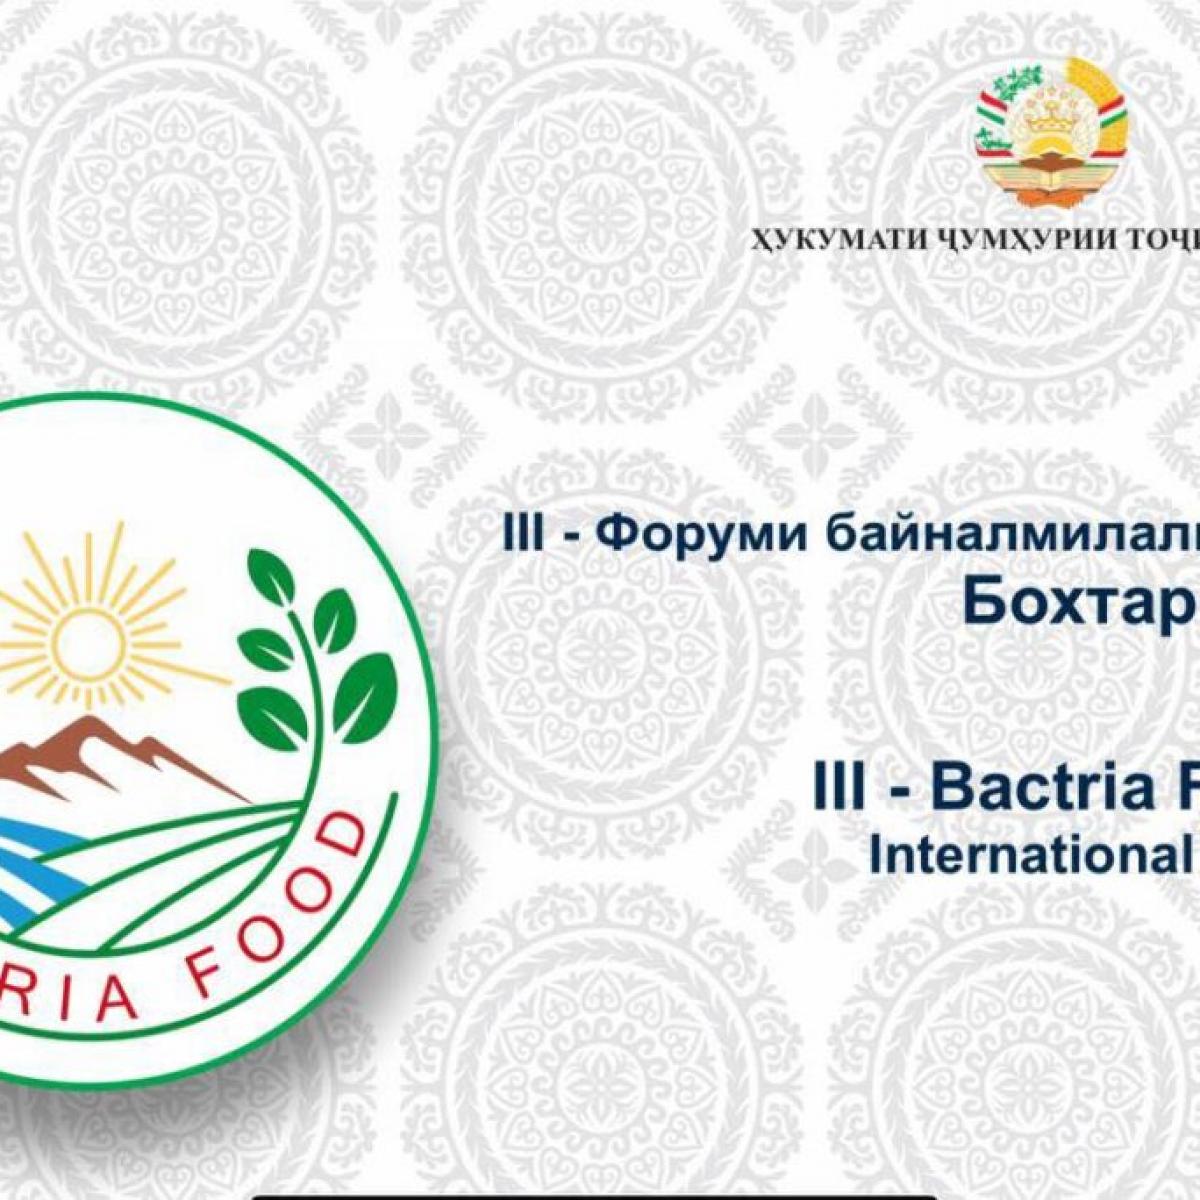 USAID Hosts Tajikistan’s Bactria Food 2023 Export Forum